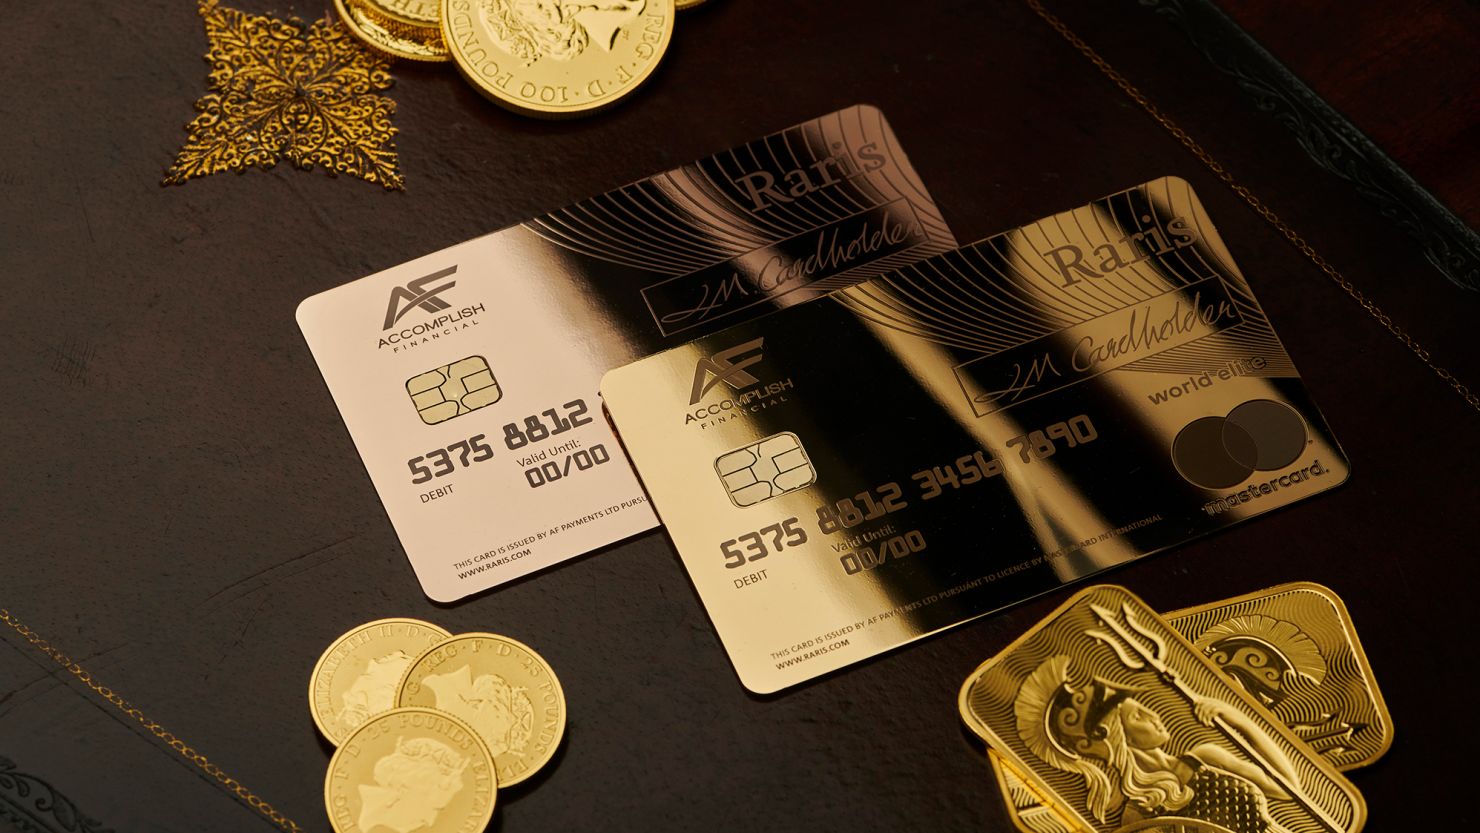 The 18-karat gold Raris debit card will set you back around $23,000.